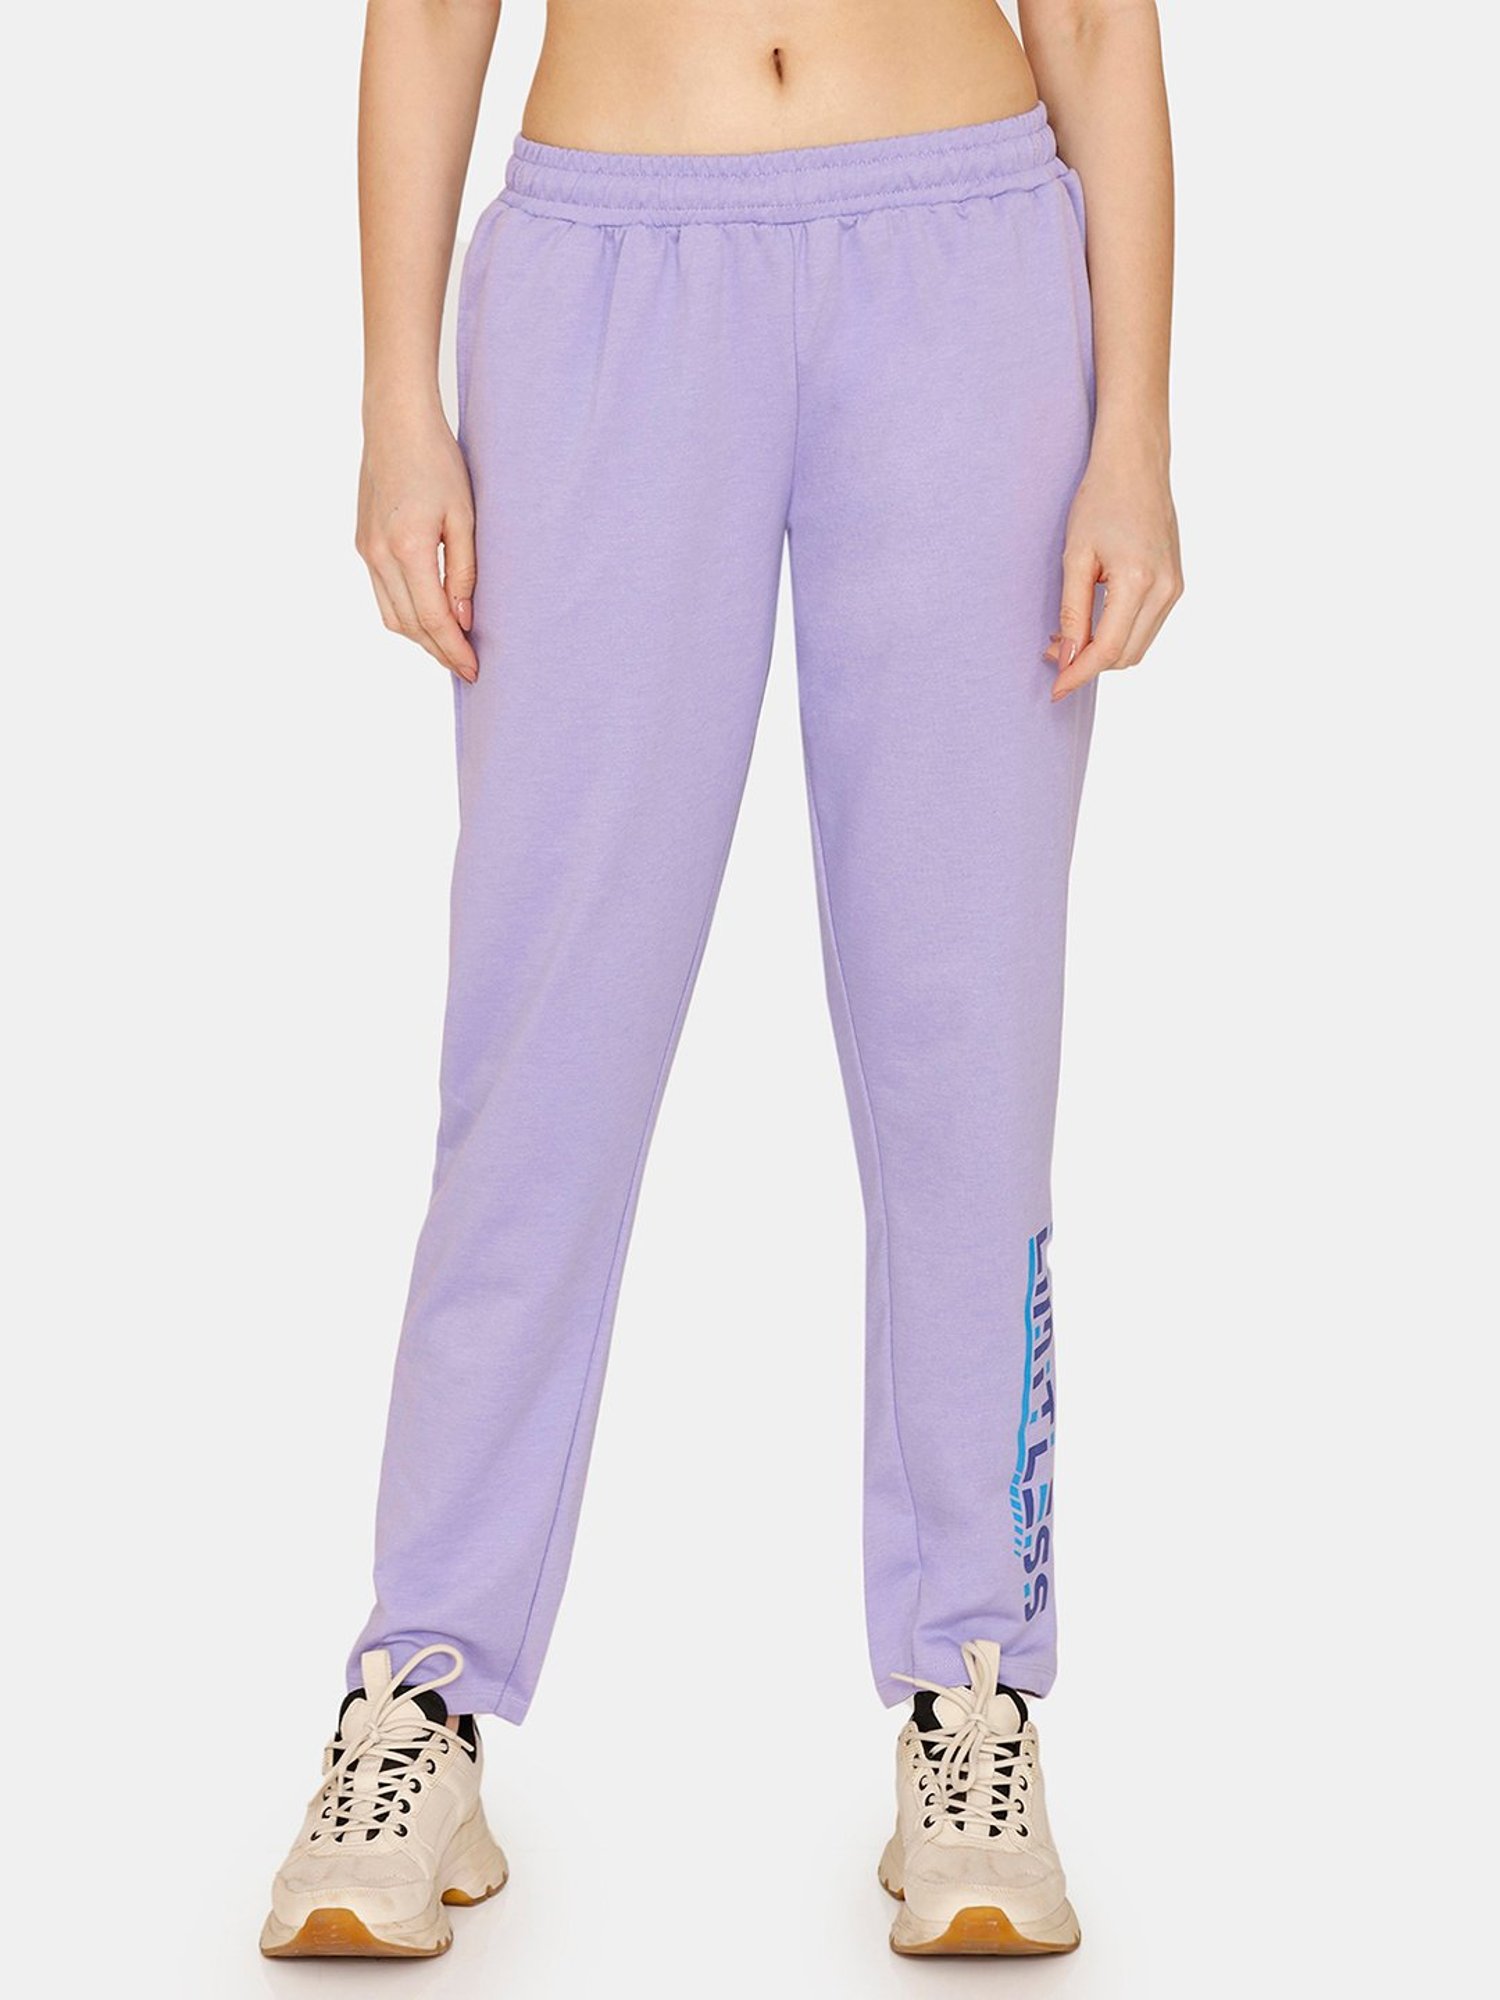 Buy Purple Track Pants for Women by ADIDAS Online  Ajiocom